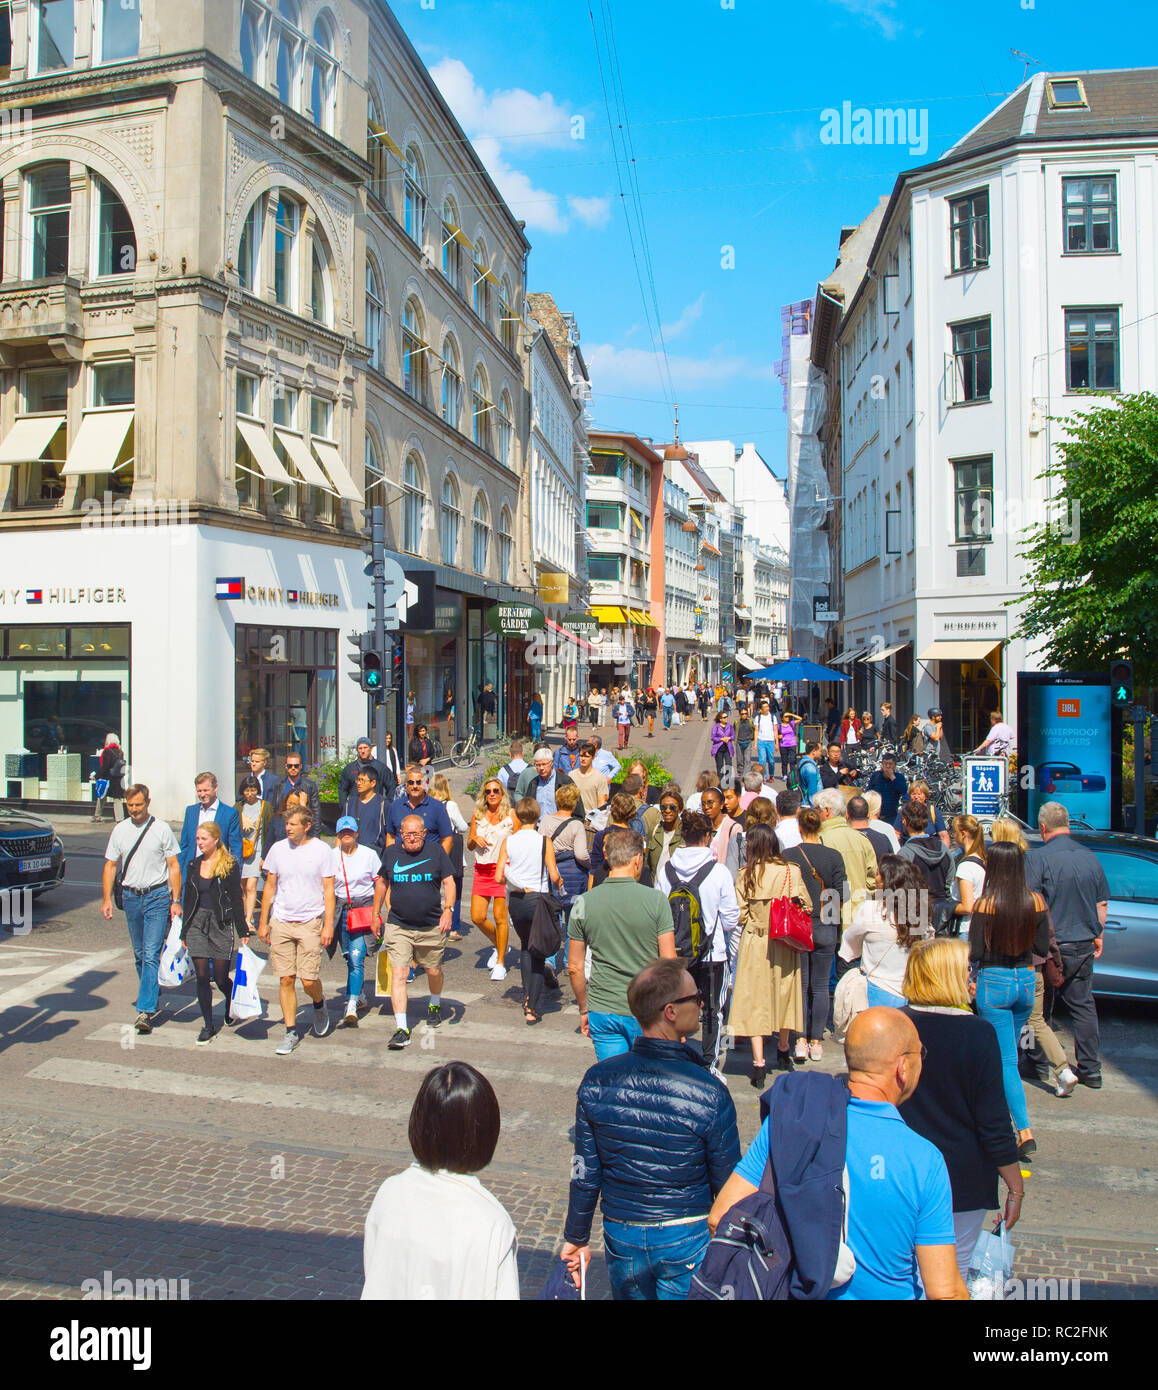 COPENHAGEN, DENMARK - JUNE 14, 2018: People crossing the road at Copenhagen central shopping street. Copenhagen is the capital of Denmark. Stock Photo